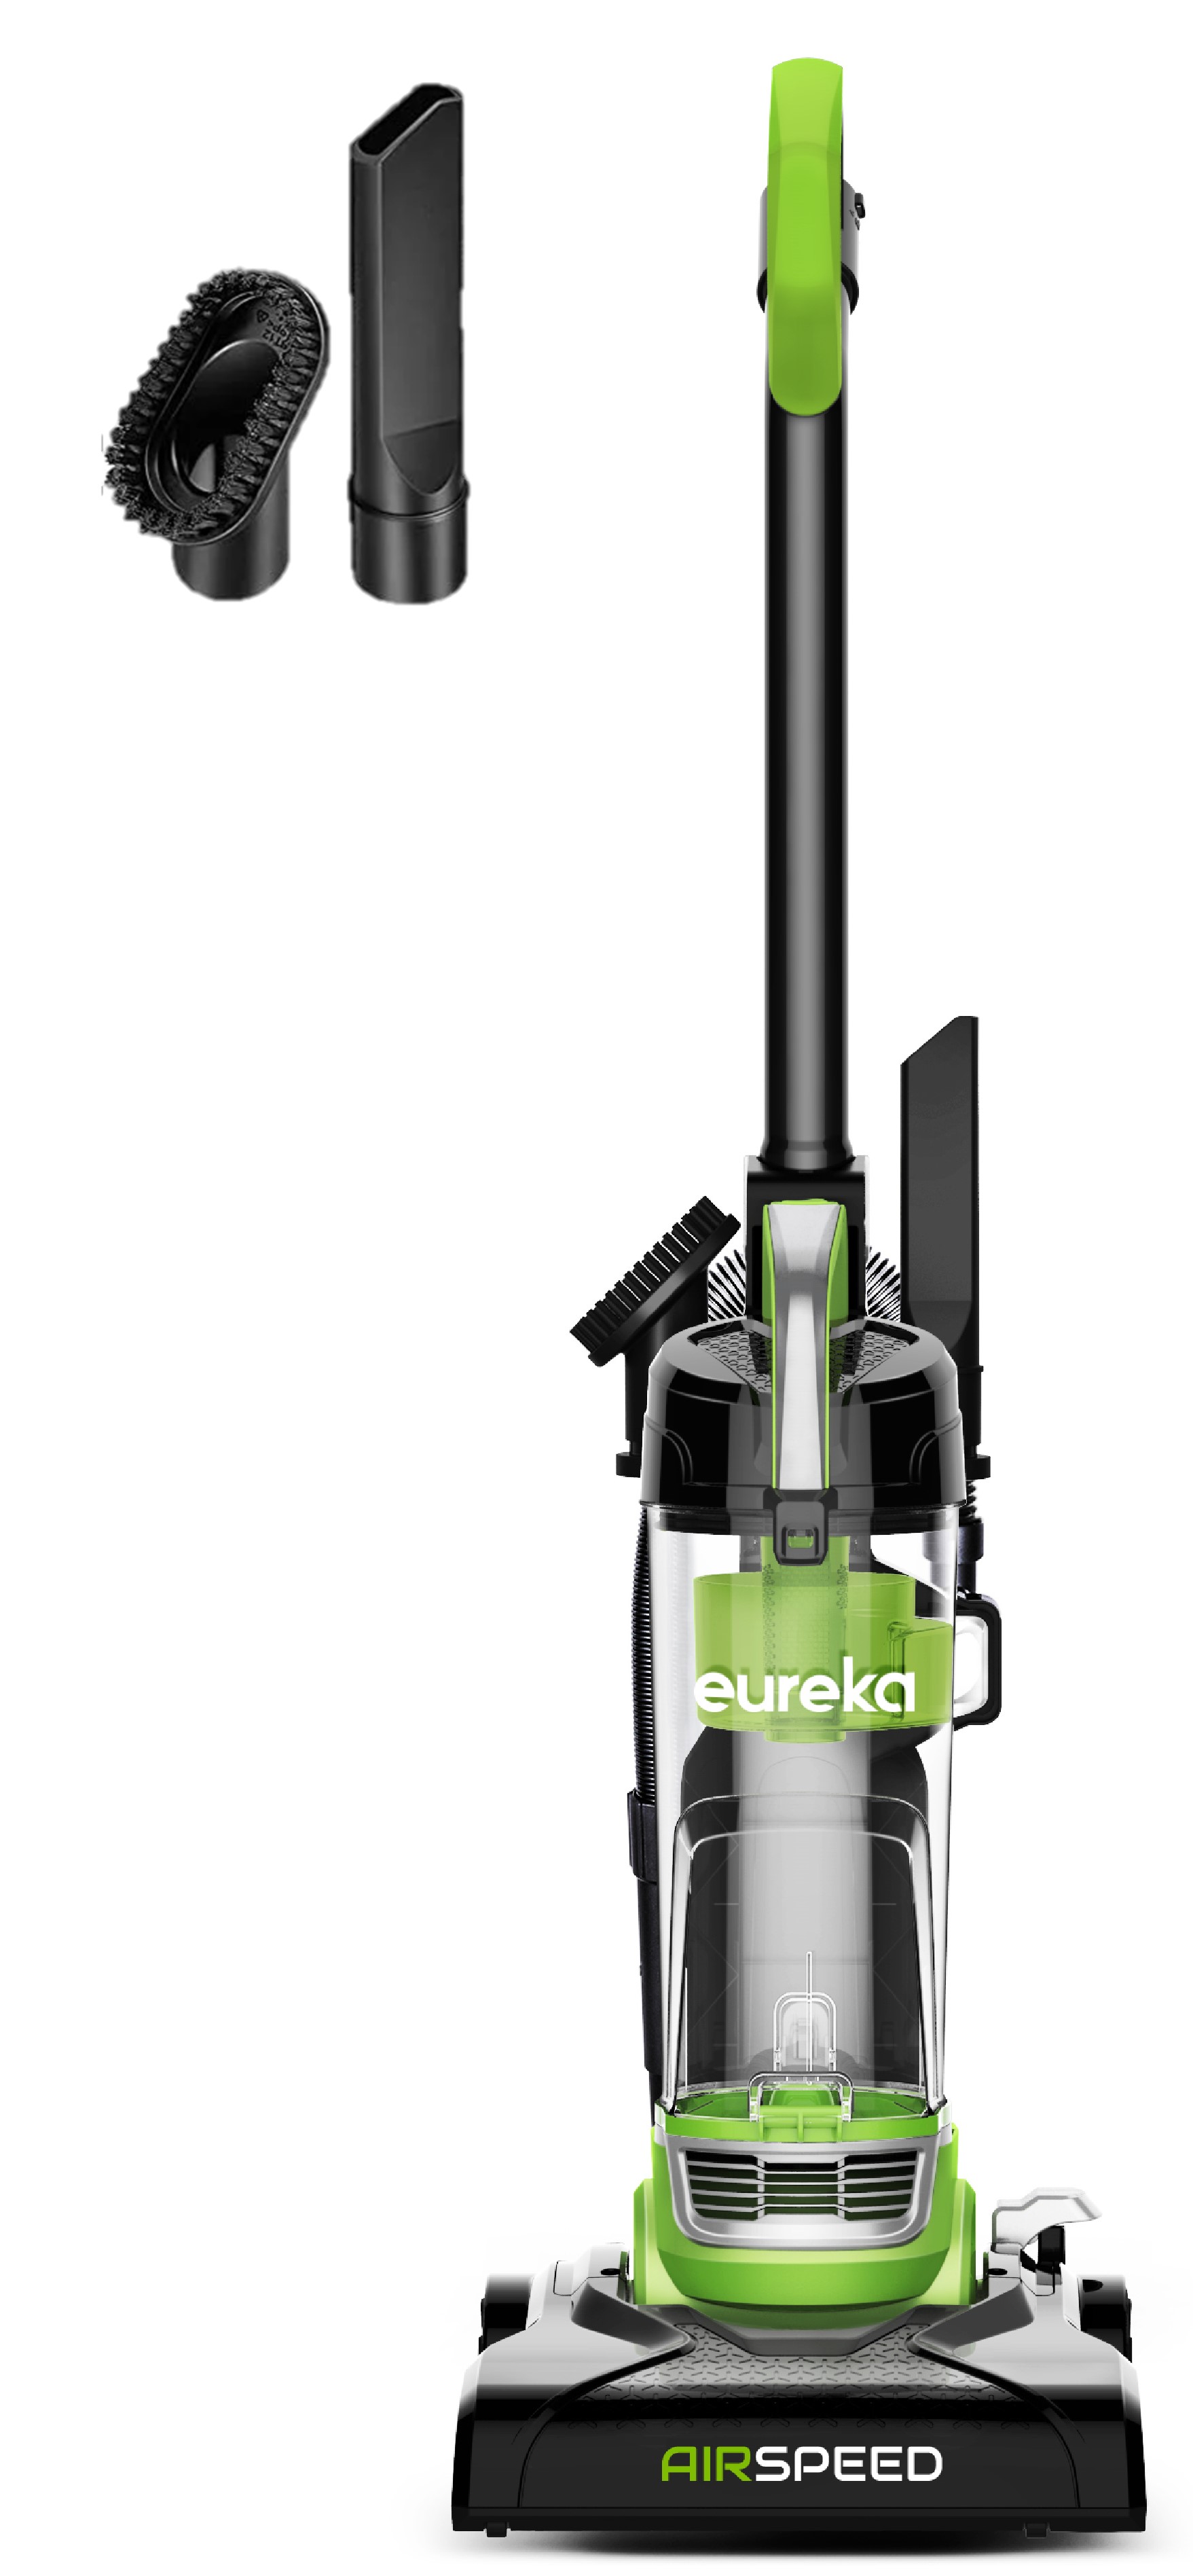 Eureka Airspeed Bagless Upright Vacuum Cleaner, NEU100 - image 1 of 11